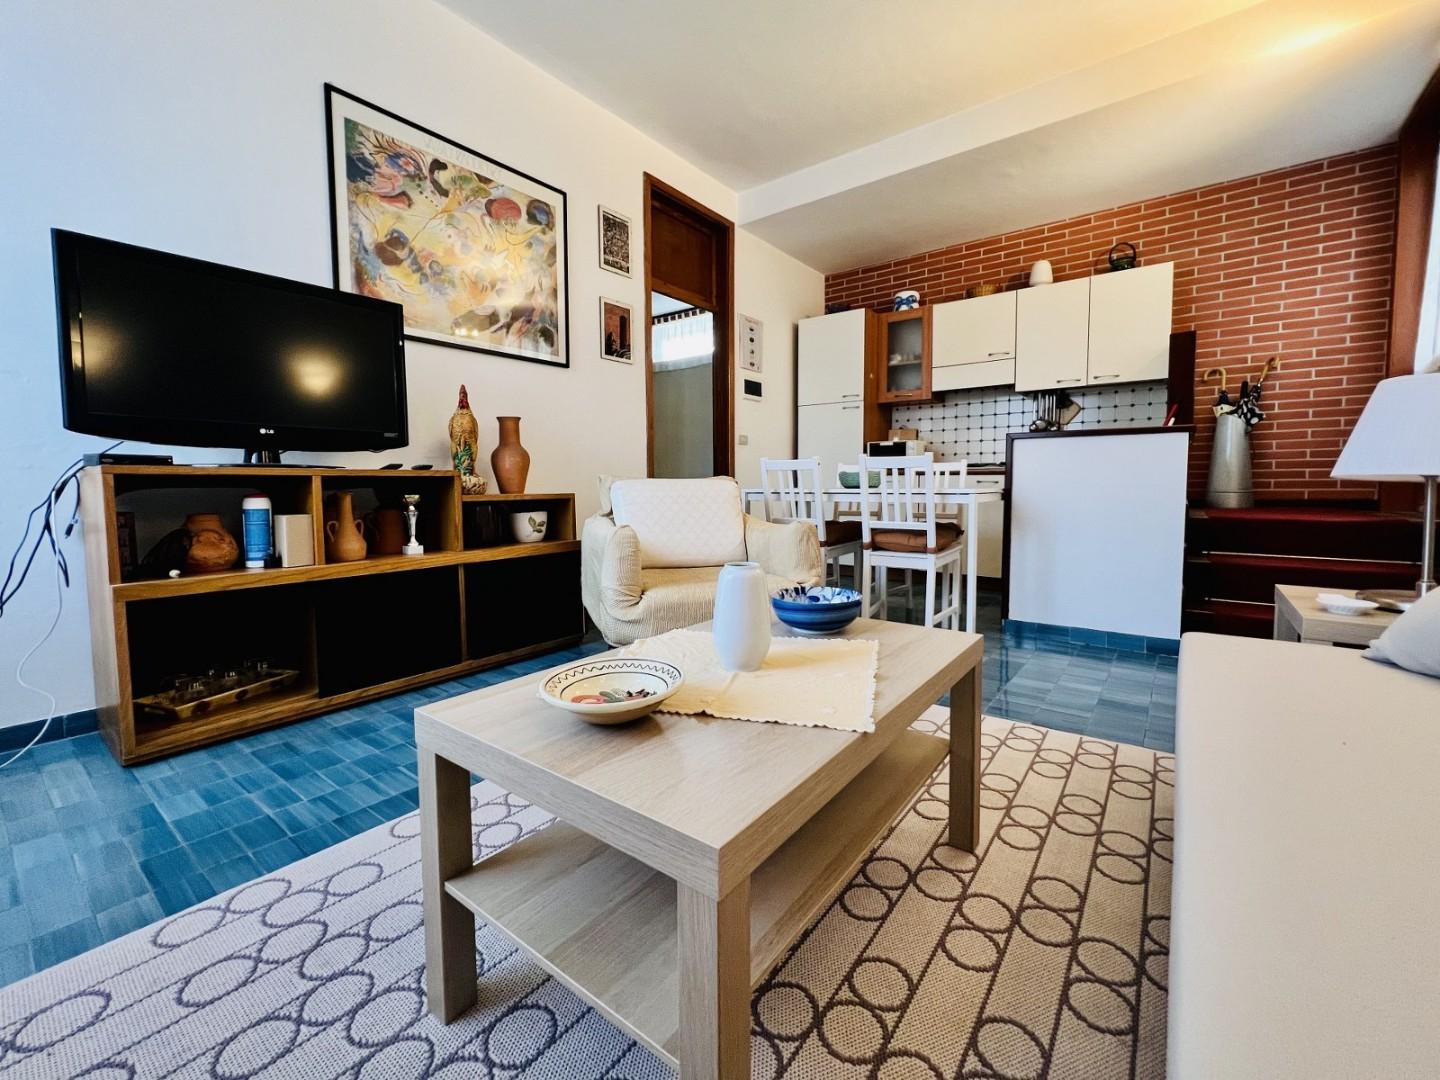 Appartamento in case vacanze a Pietrasanta (LU)